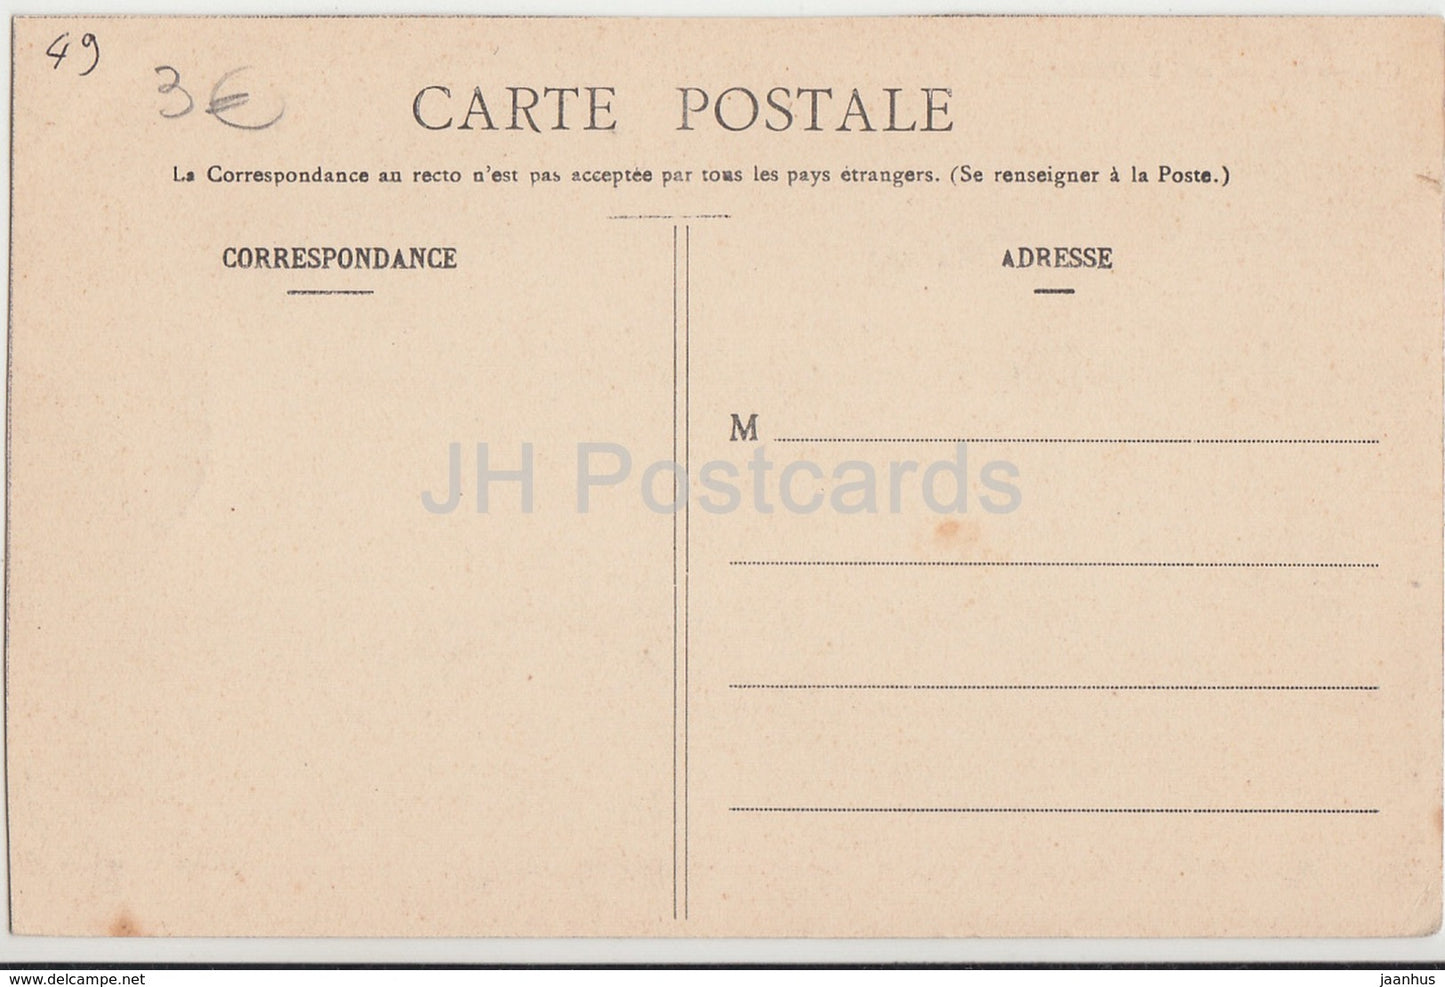 Fougere - Chateau de Gastines - castle - old postcard - France - unused